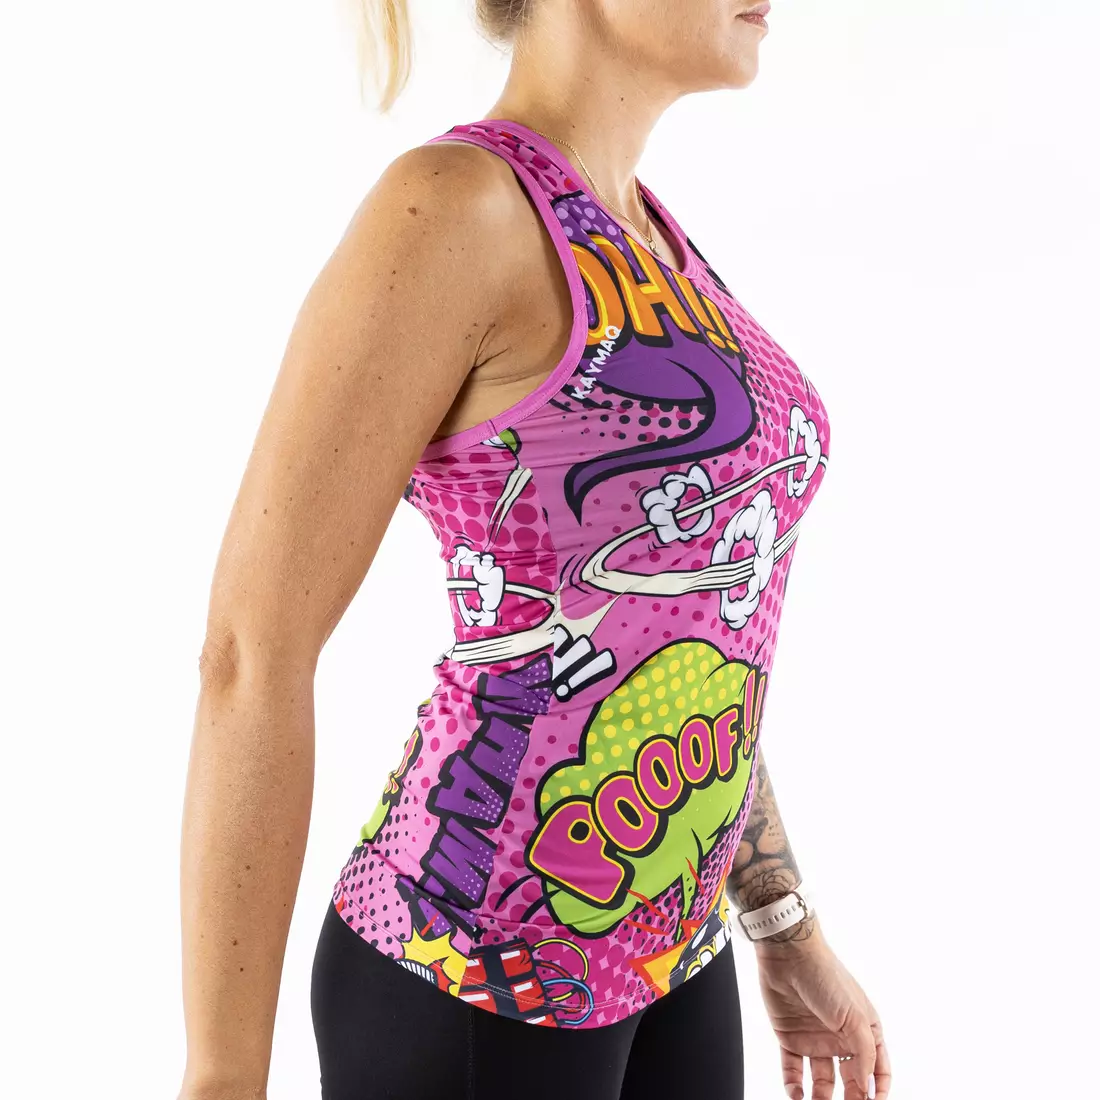 KAYMAQ W27 Women's Tank Top Sports shirt with shoulder straps, pink